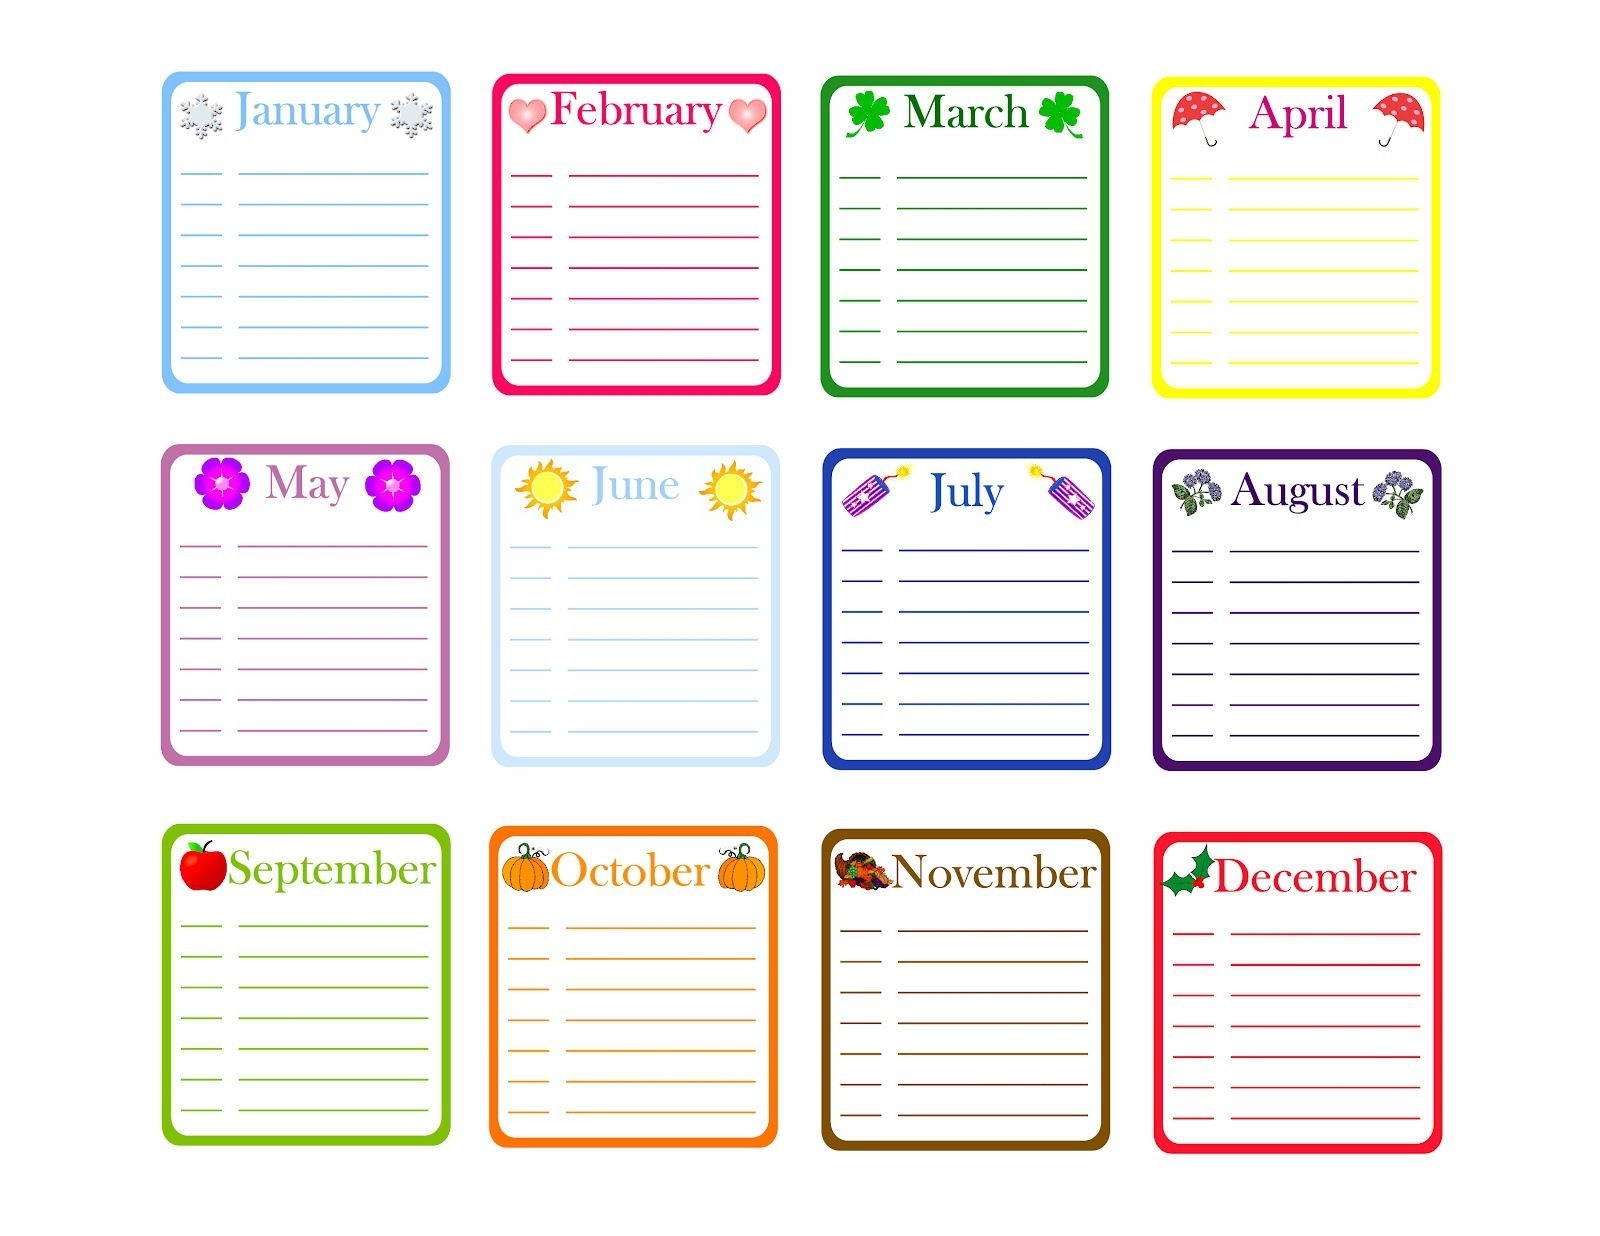 Yearly Birthday Calendar Template. Free Classroom Printables regarding Free Printable Birthday Calendar Template